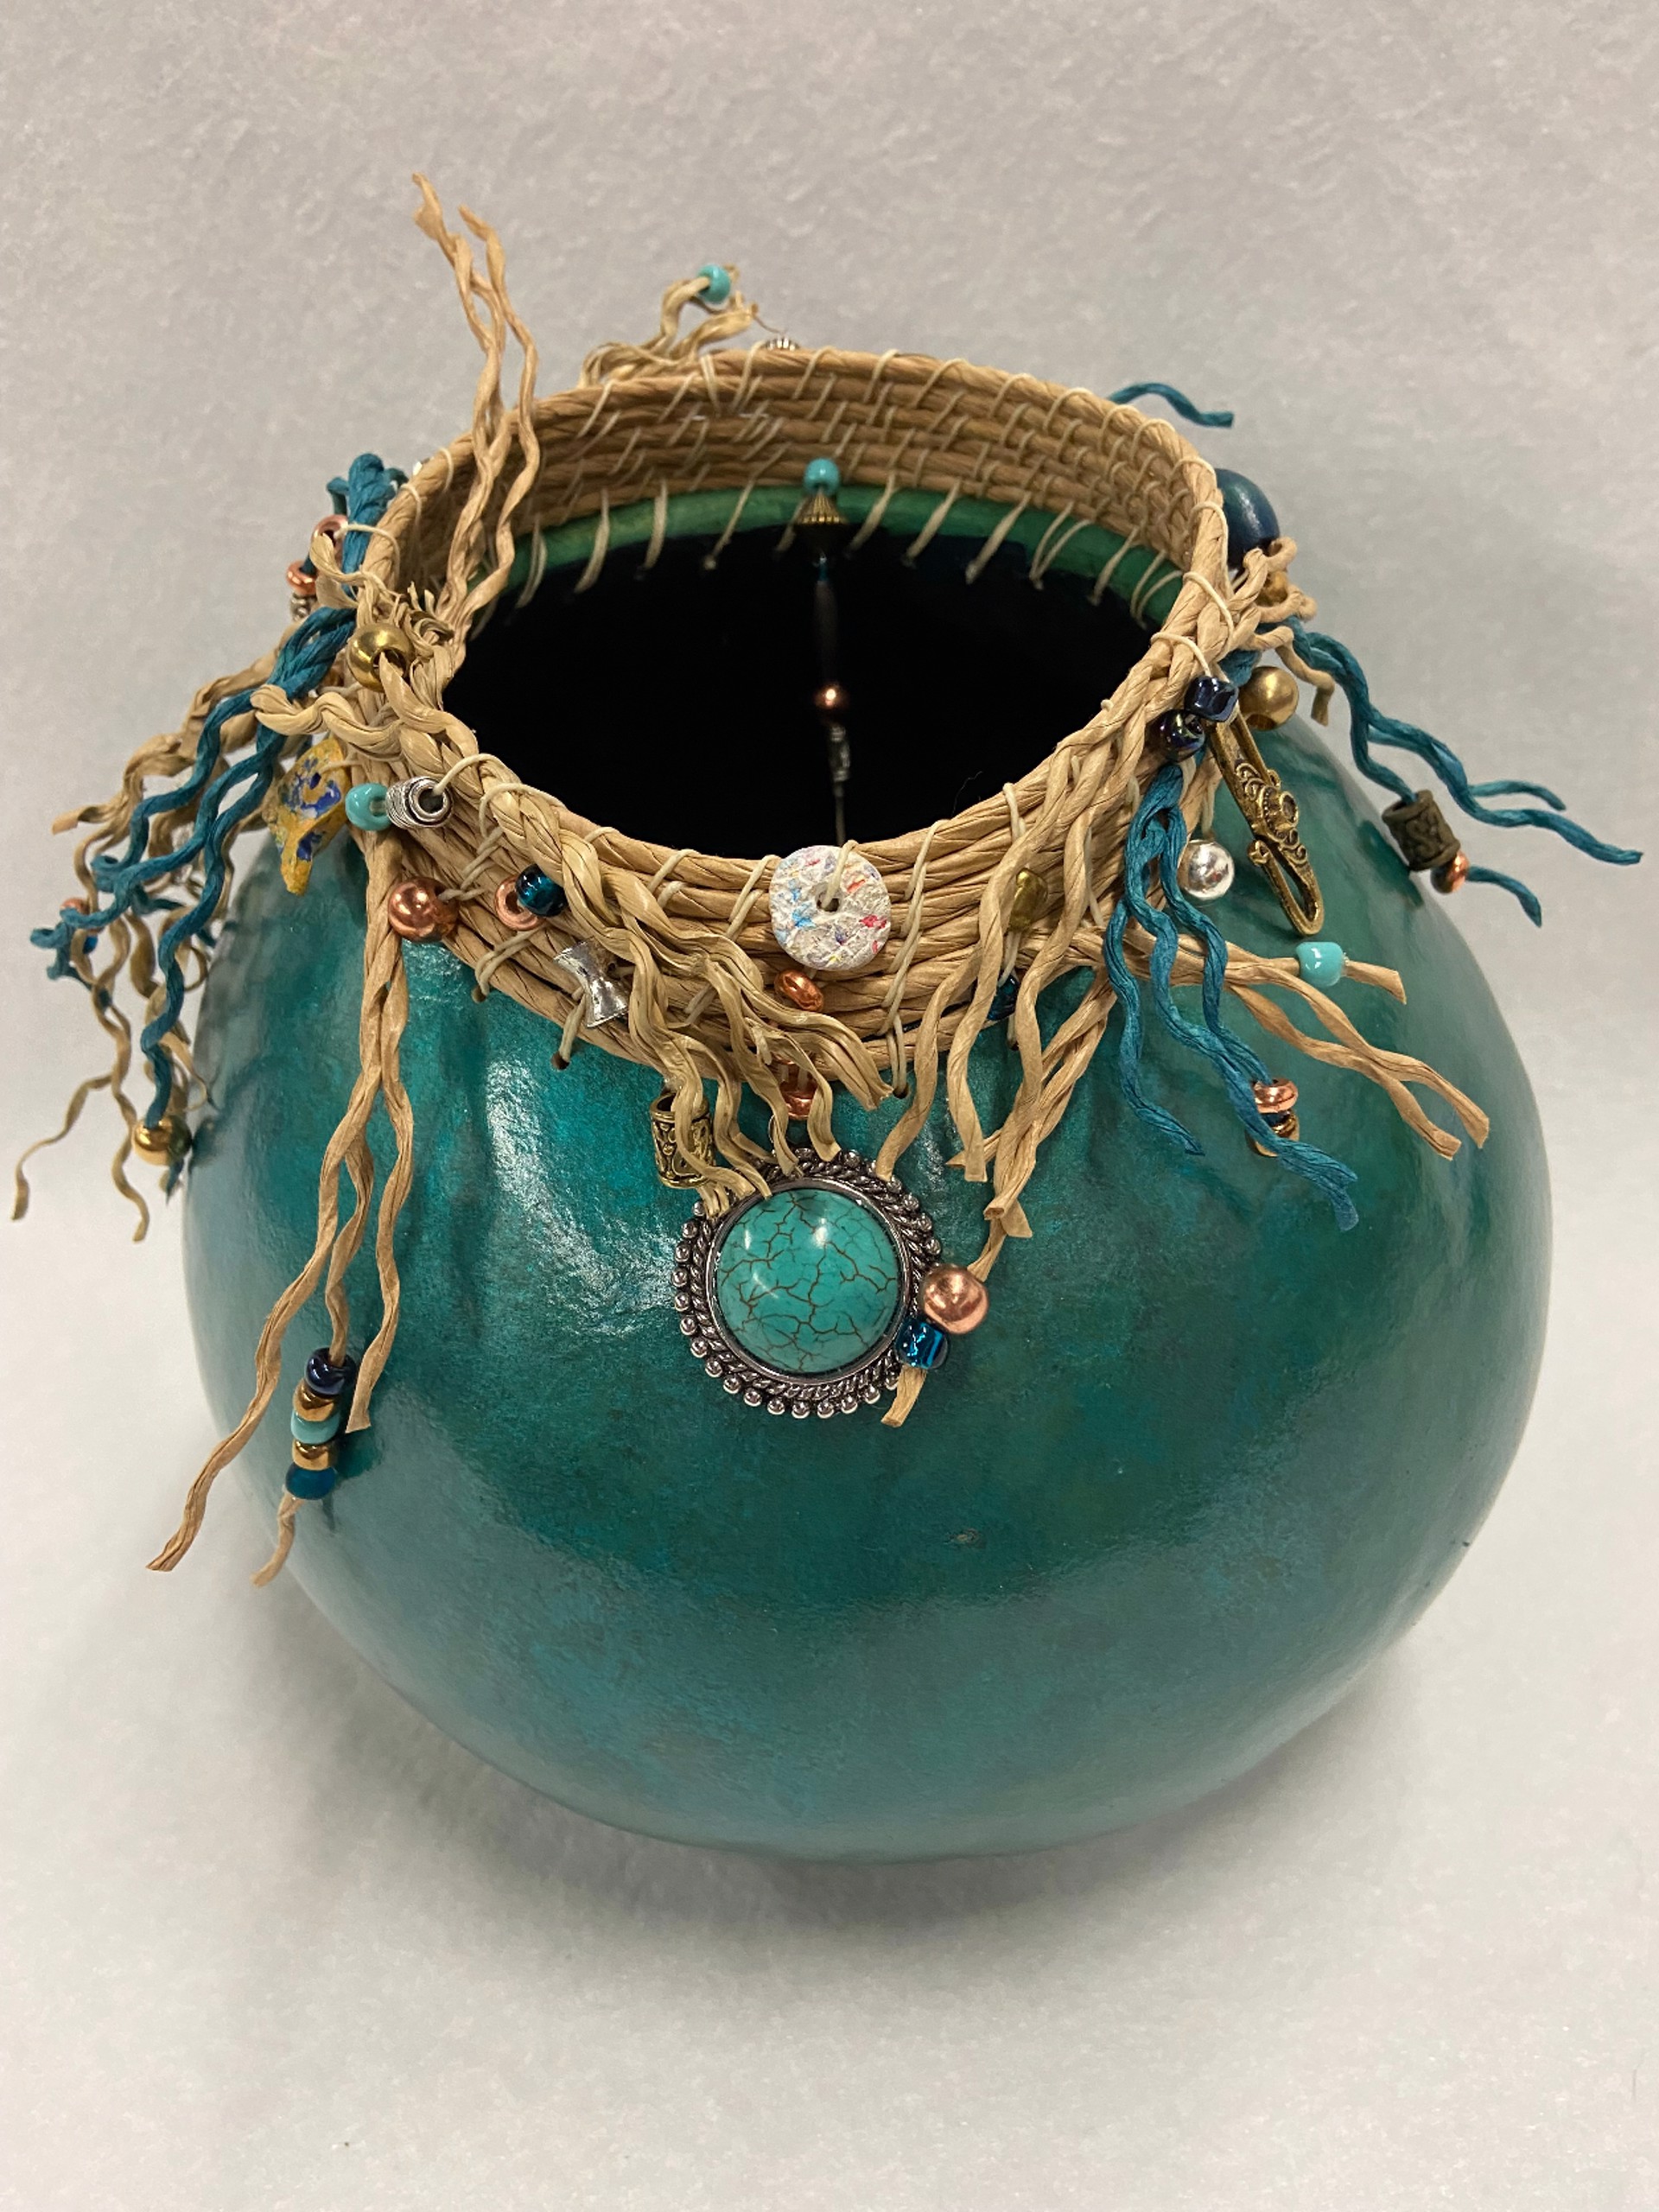 Teal Bird's Nest by Kate Shoemaker